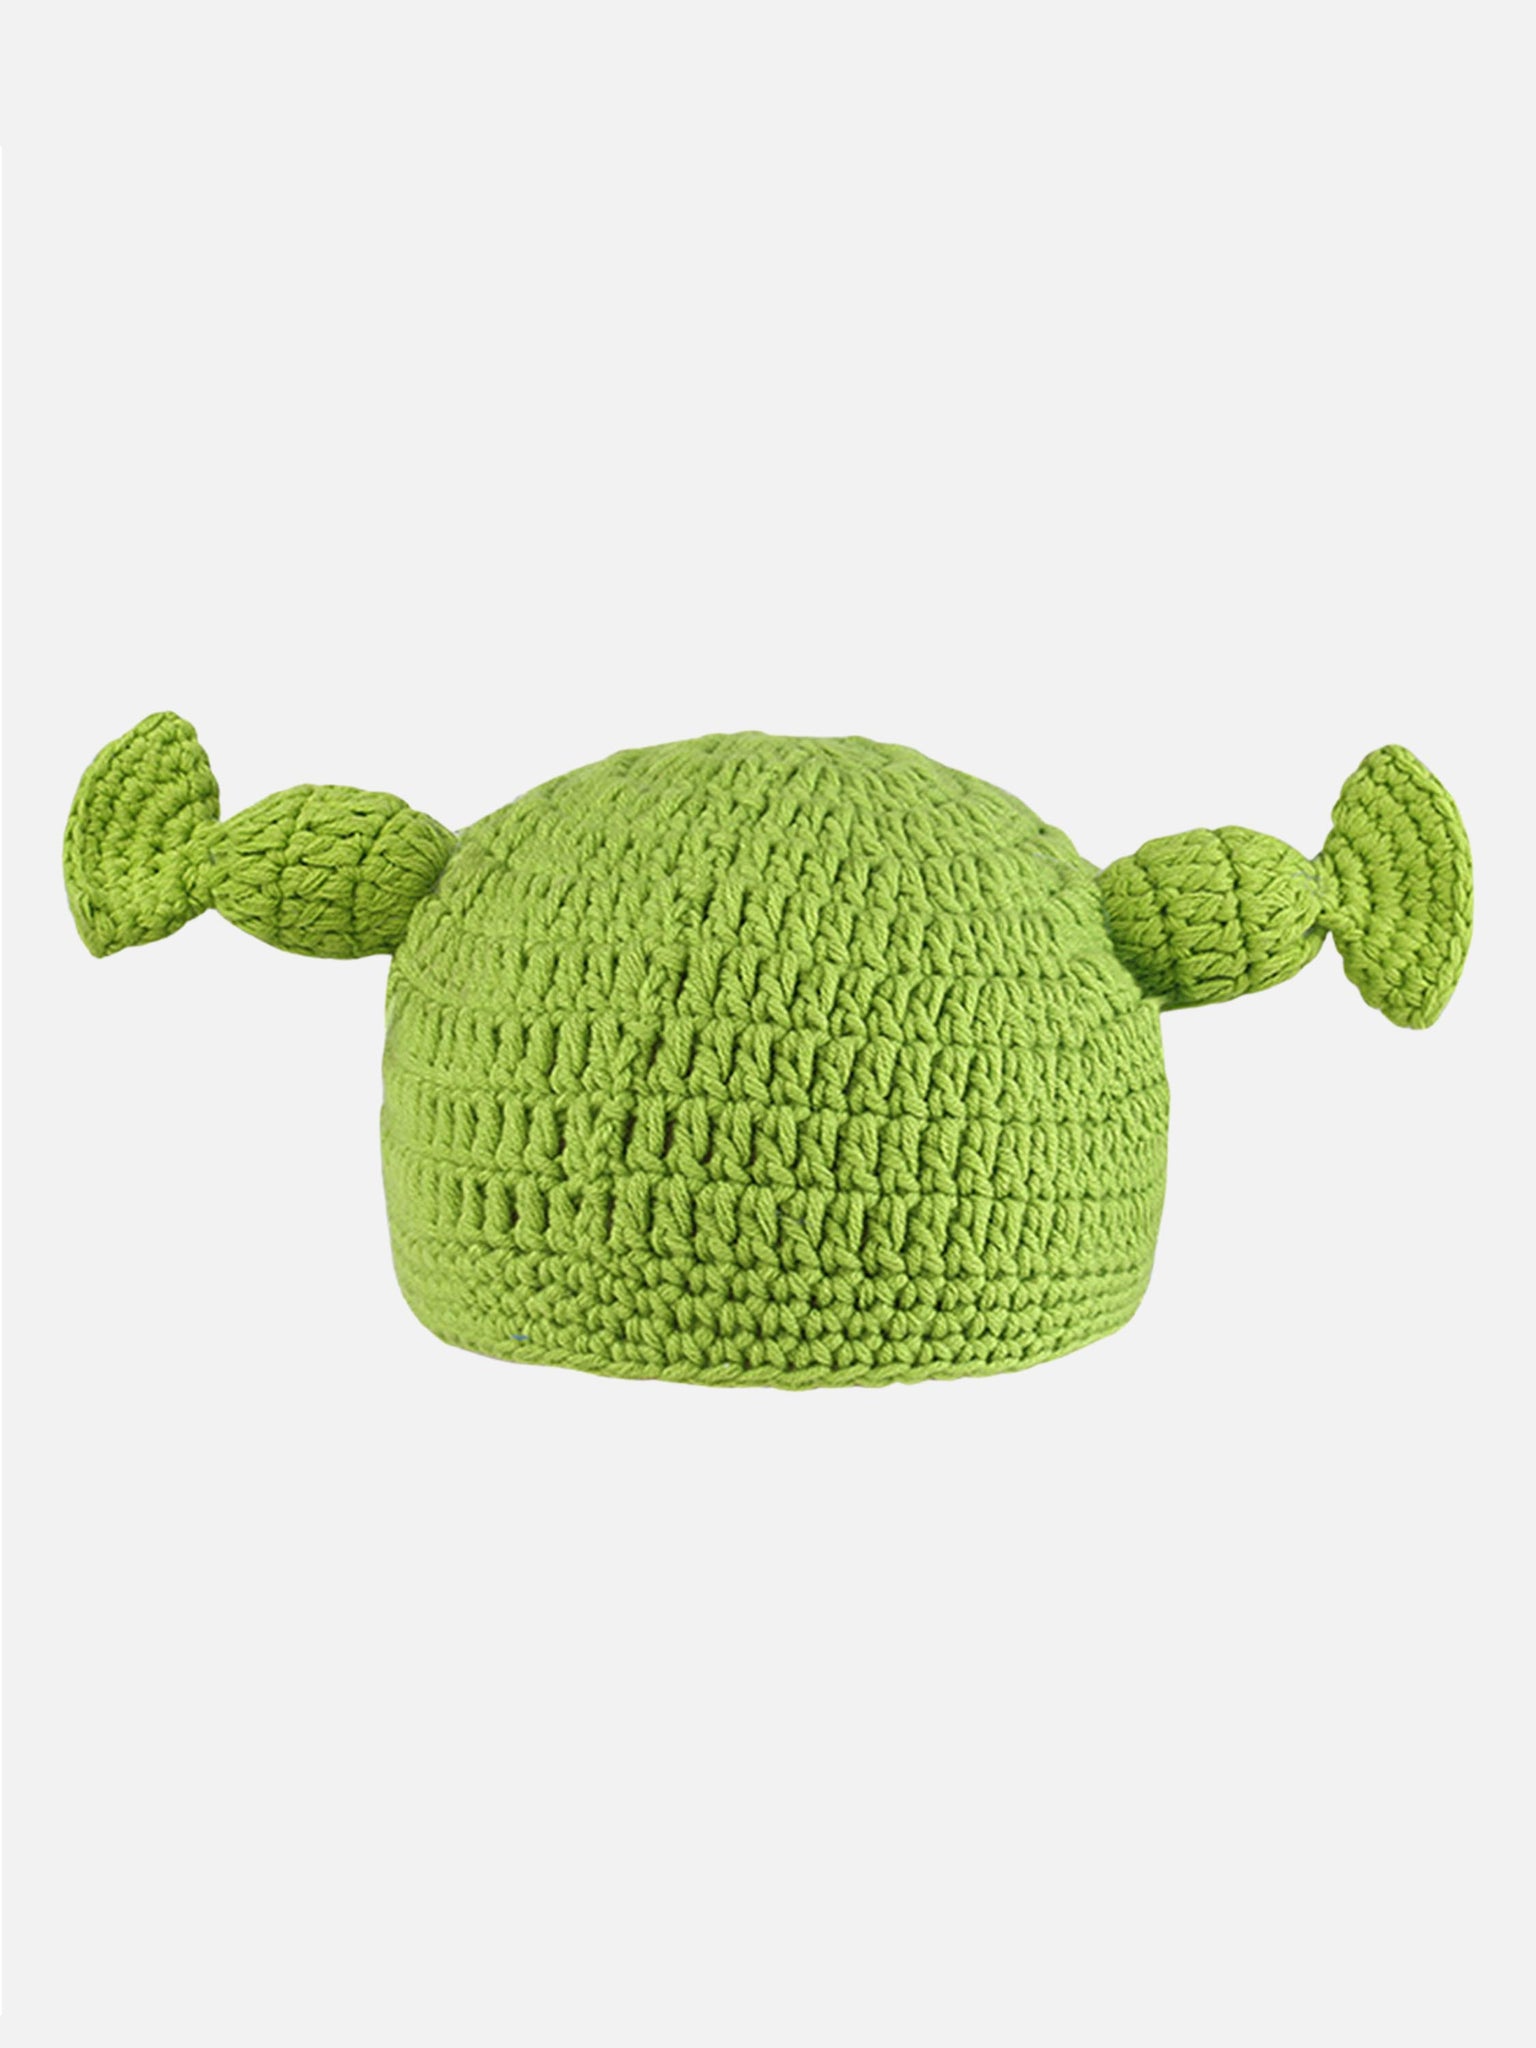 Thesupermade Fashion Fun Hand Knitting Green Cartoon Head Cover Knitted Cap